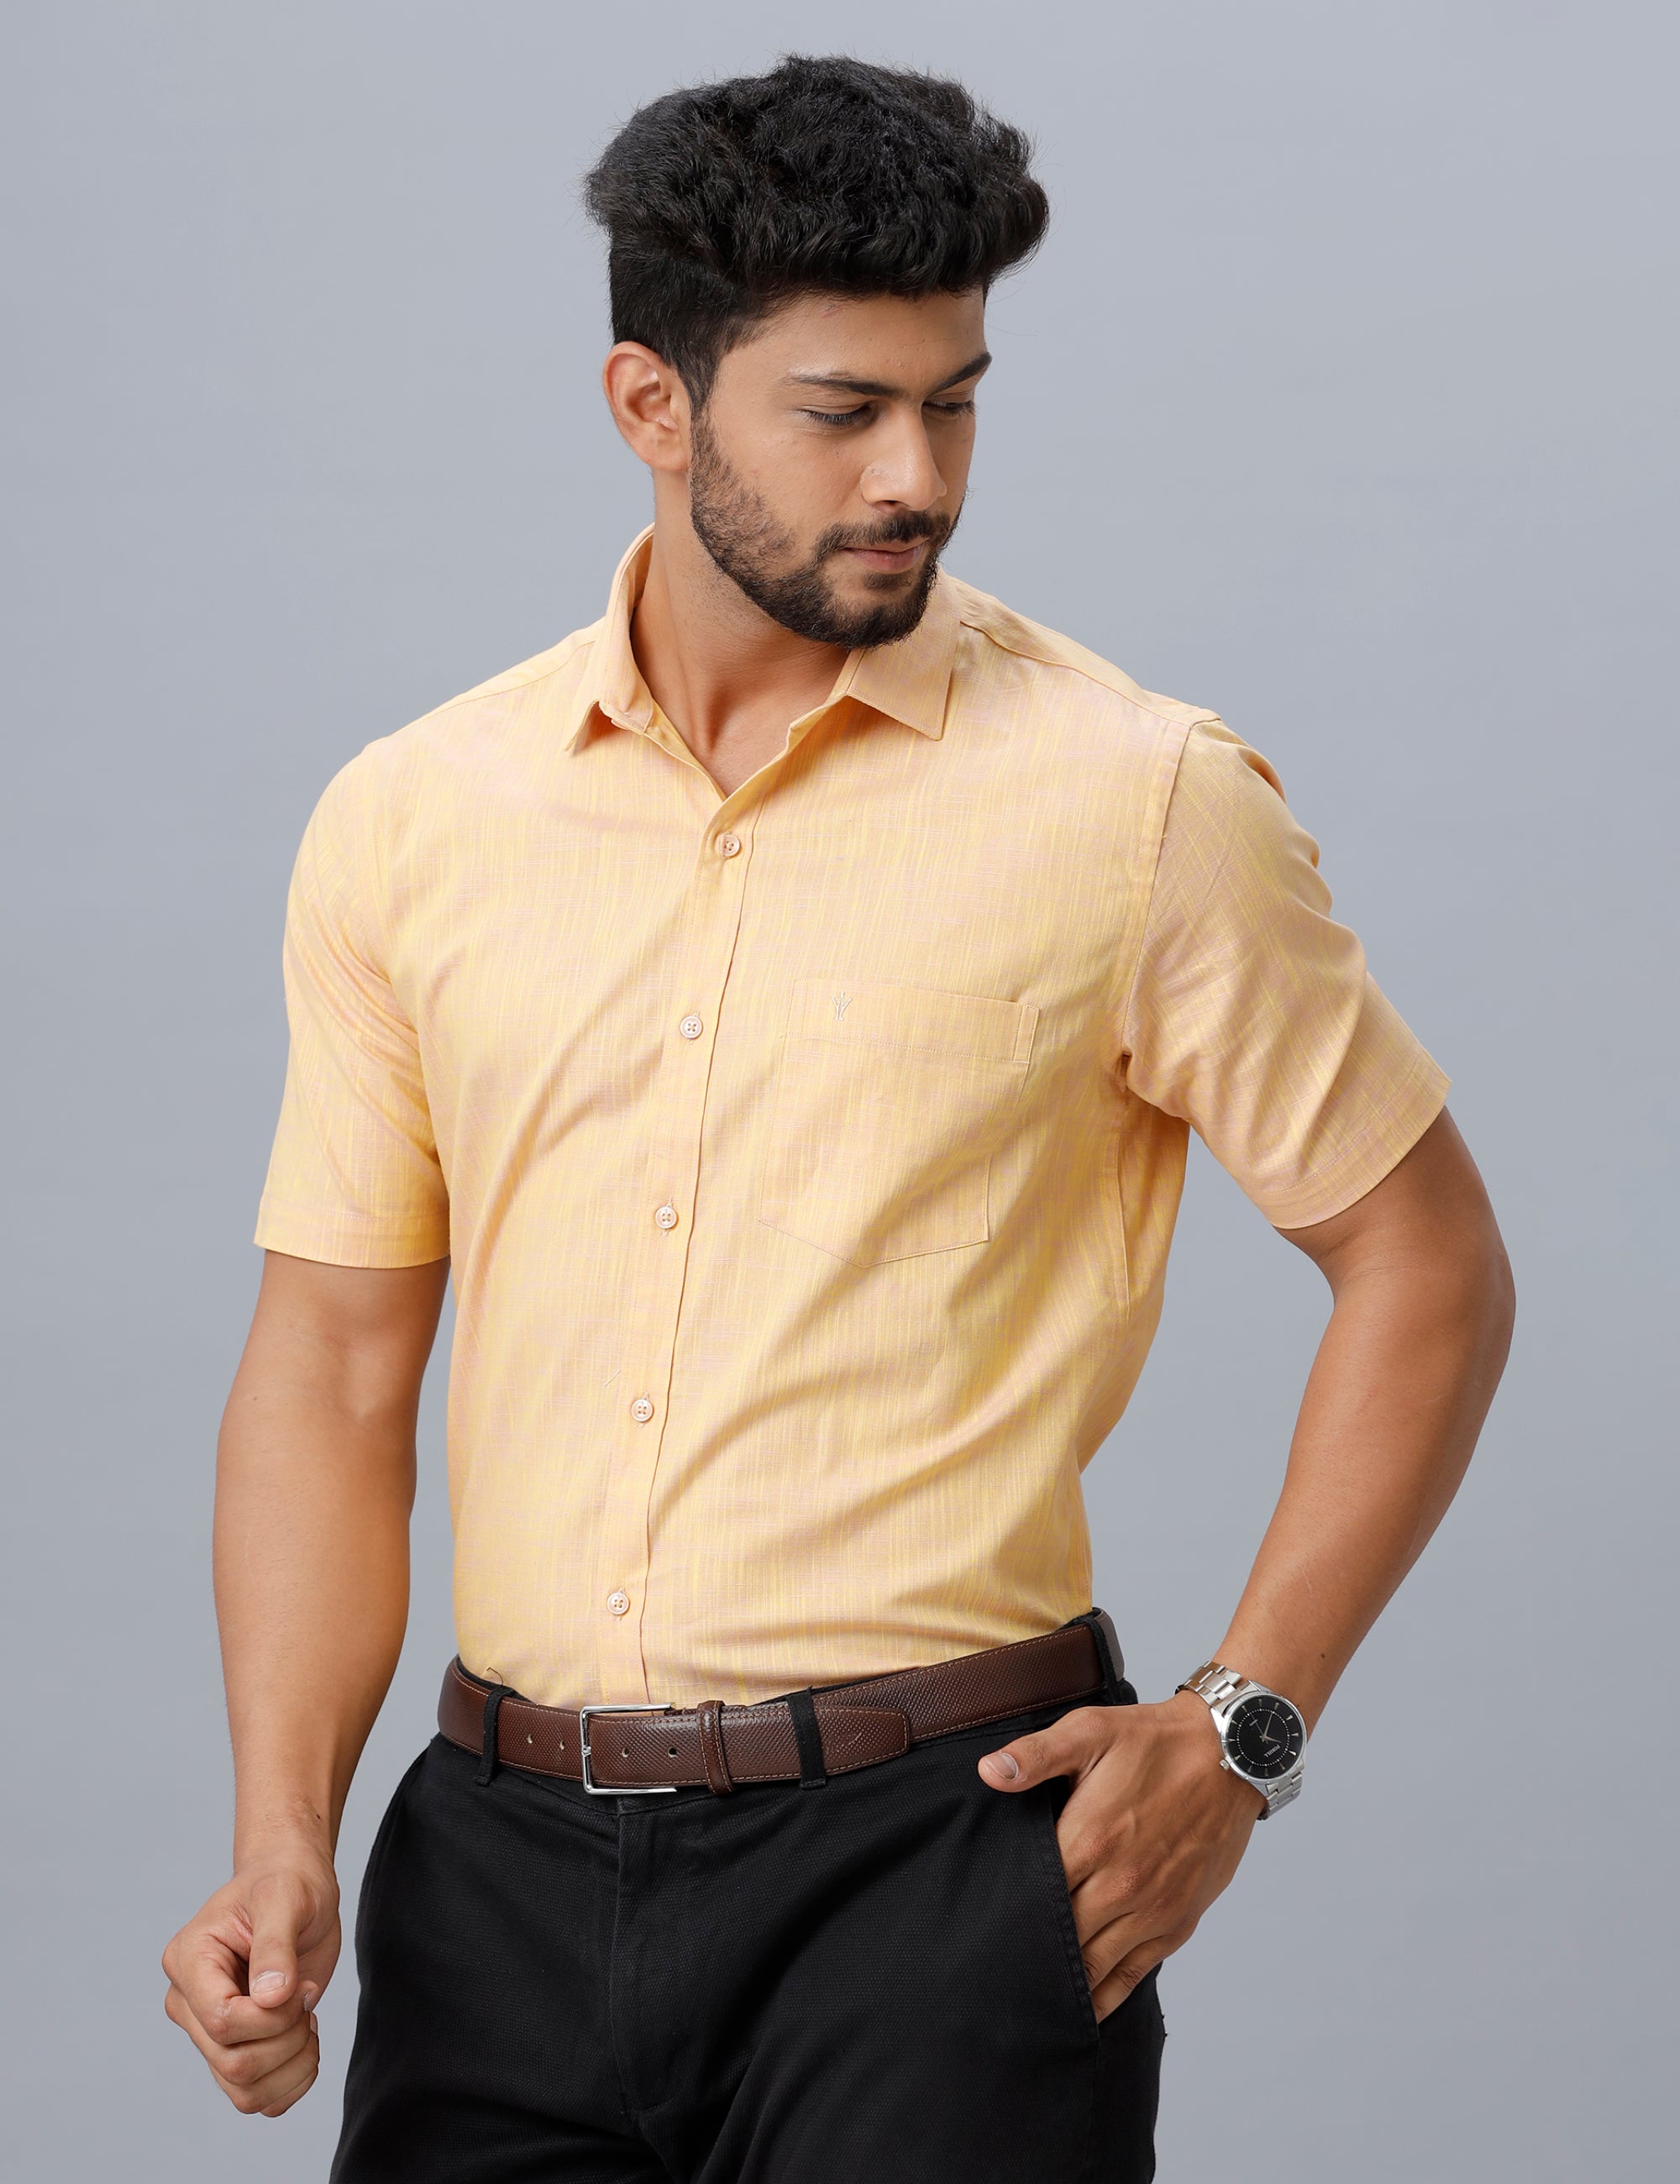 Mens Formal Shirt Half Sleeves Light Orange CL2 GT16-Front view